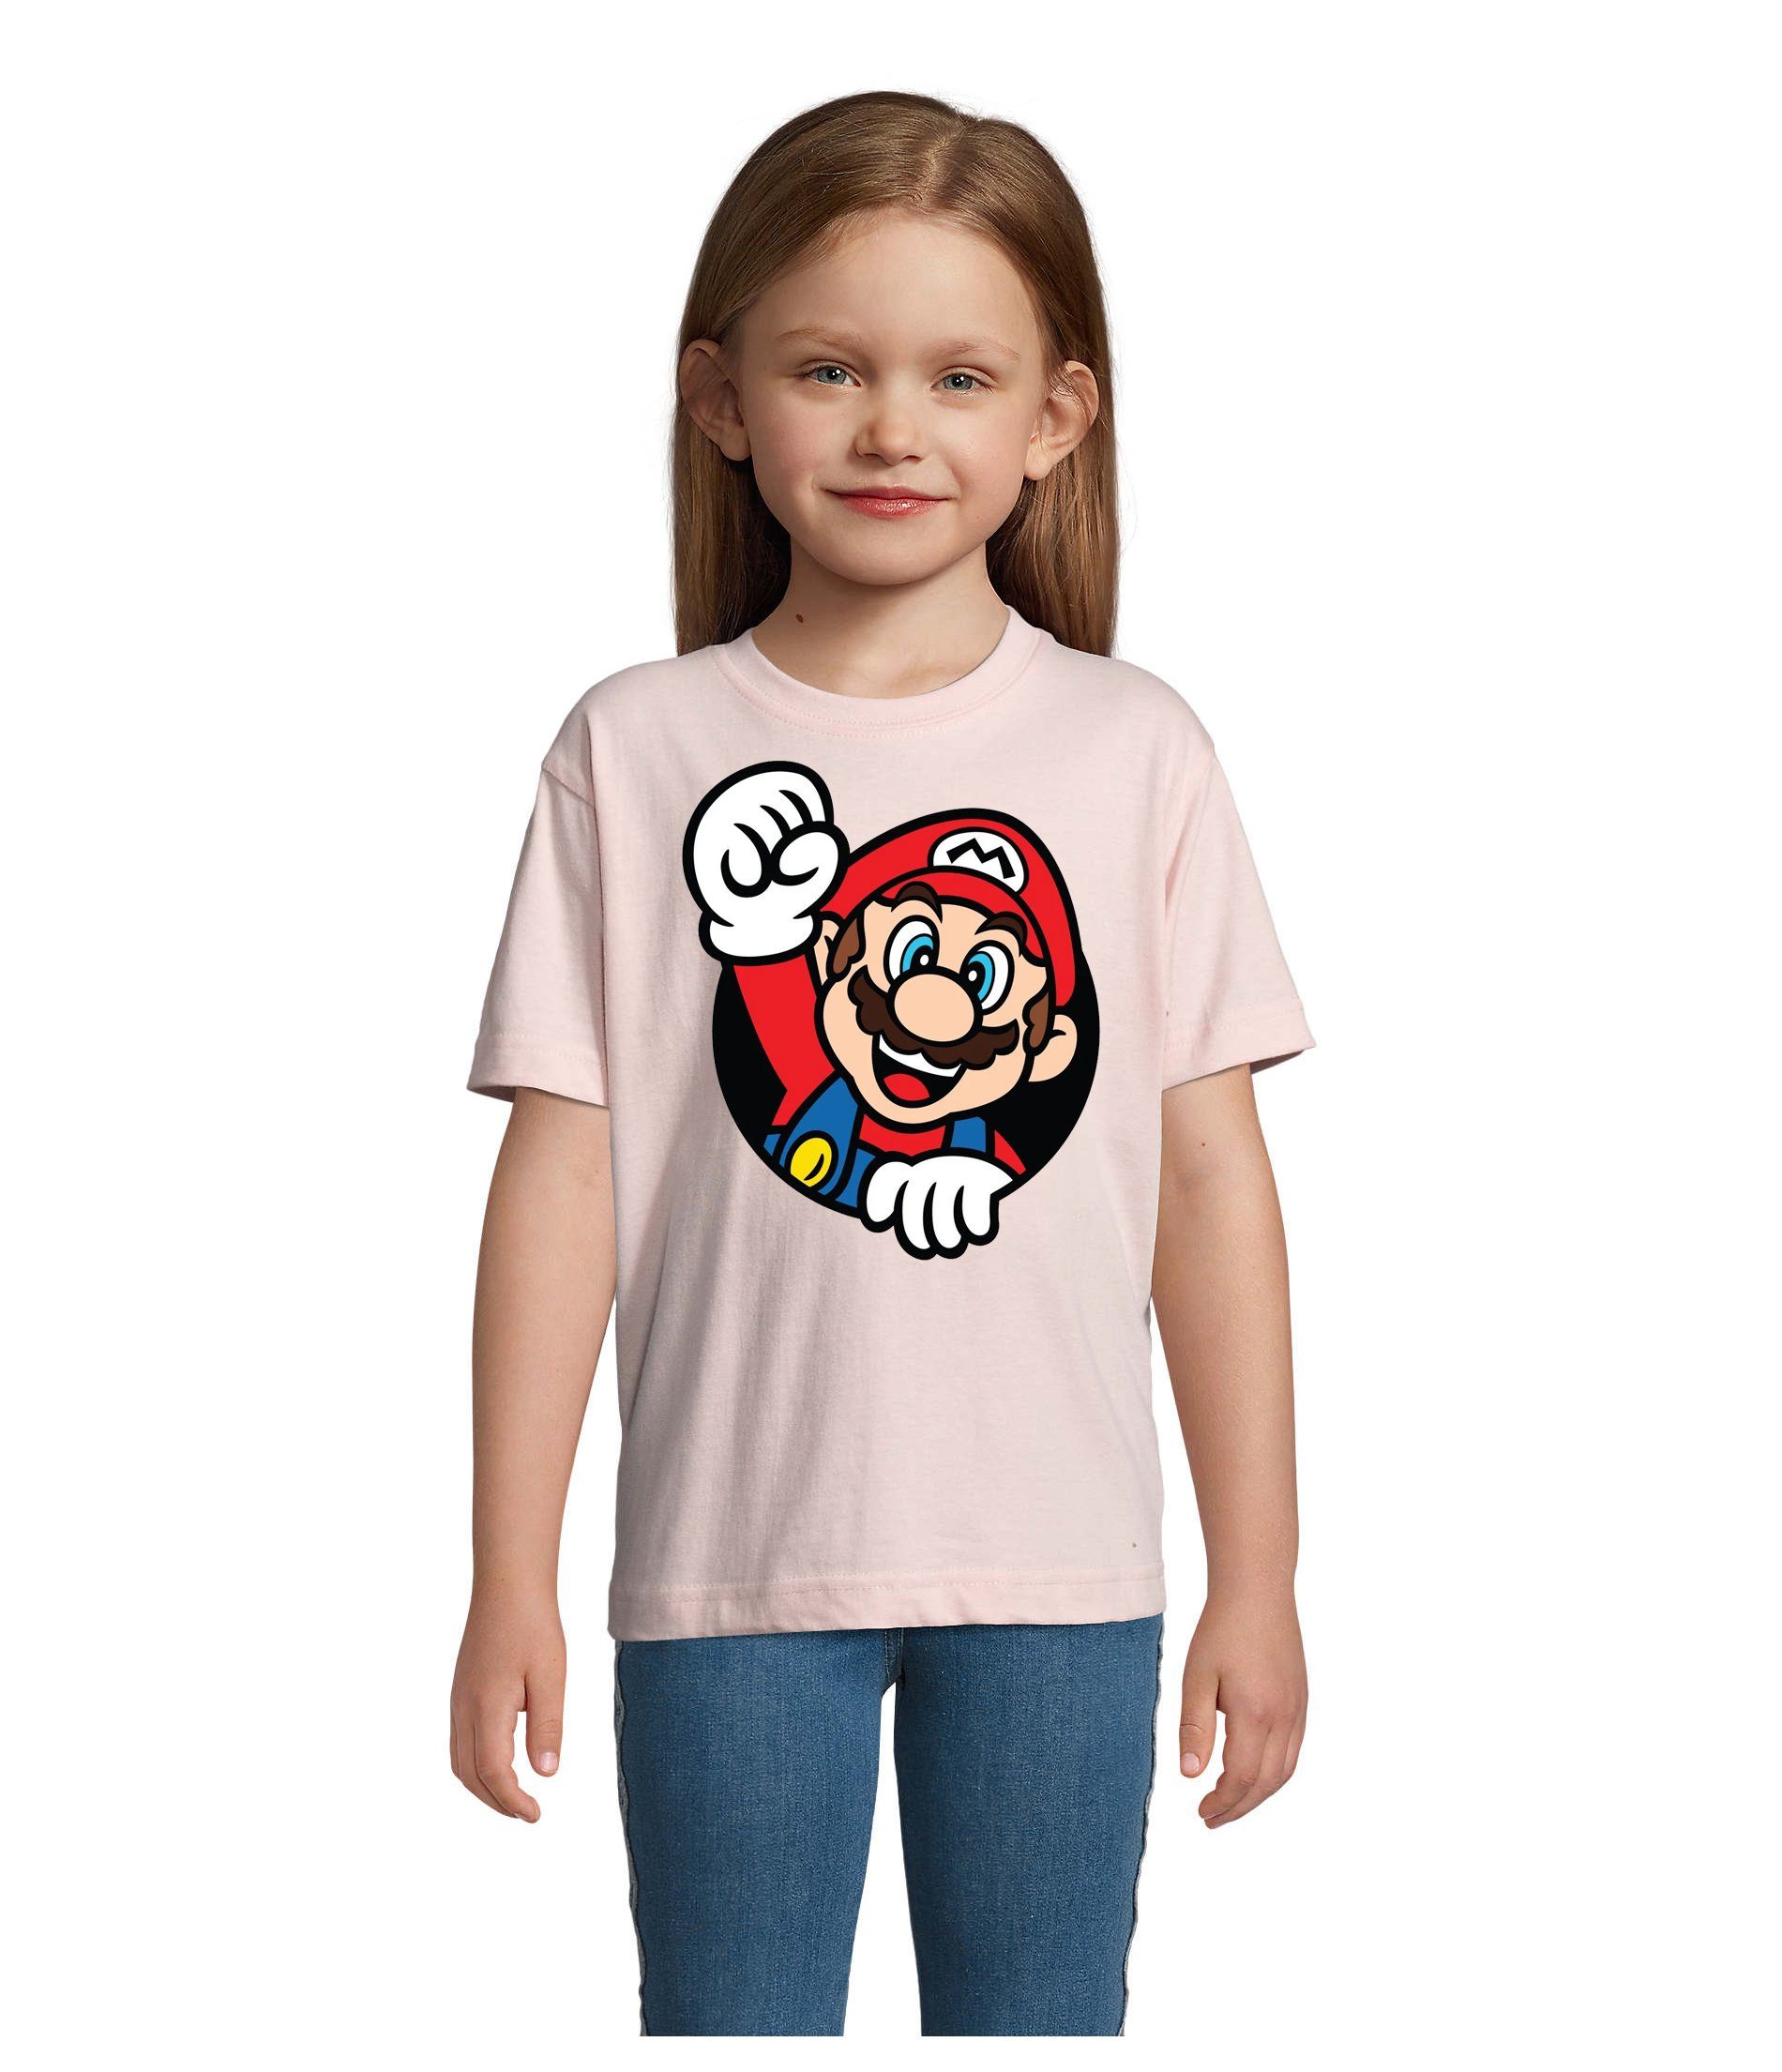 Konsole Nerd Spiel Kinder & Mario Konsole T-Shirt Brownie Faust Rosa Nintendo Blondie Gaming Super